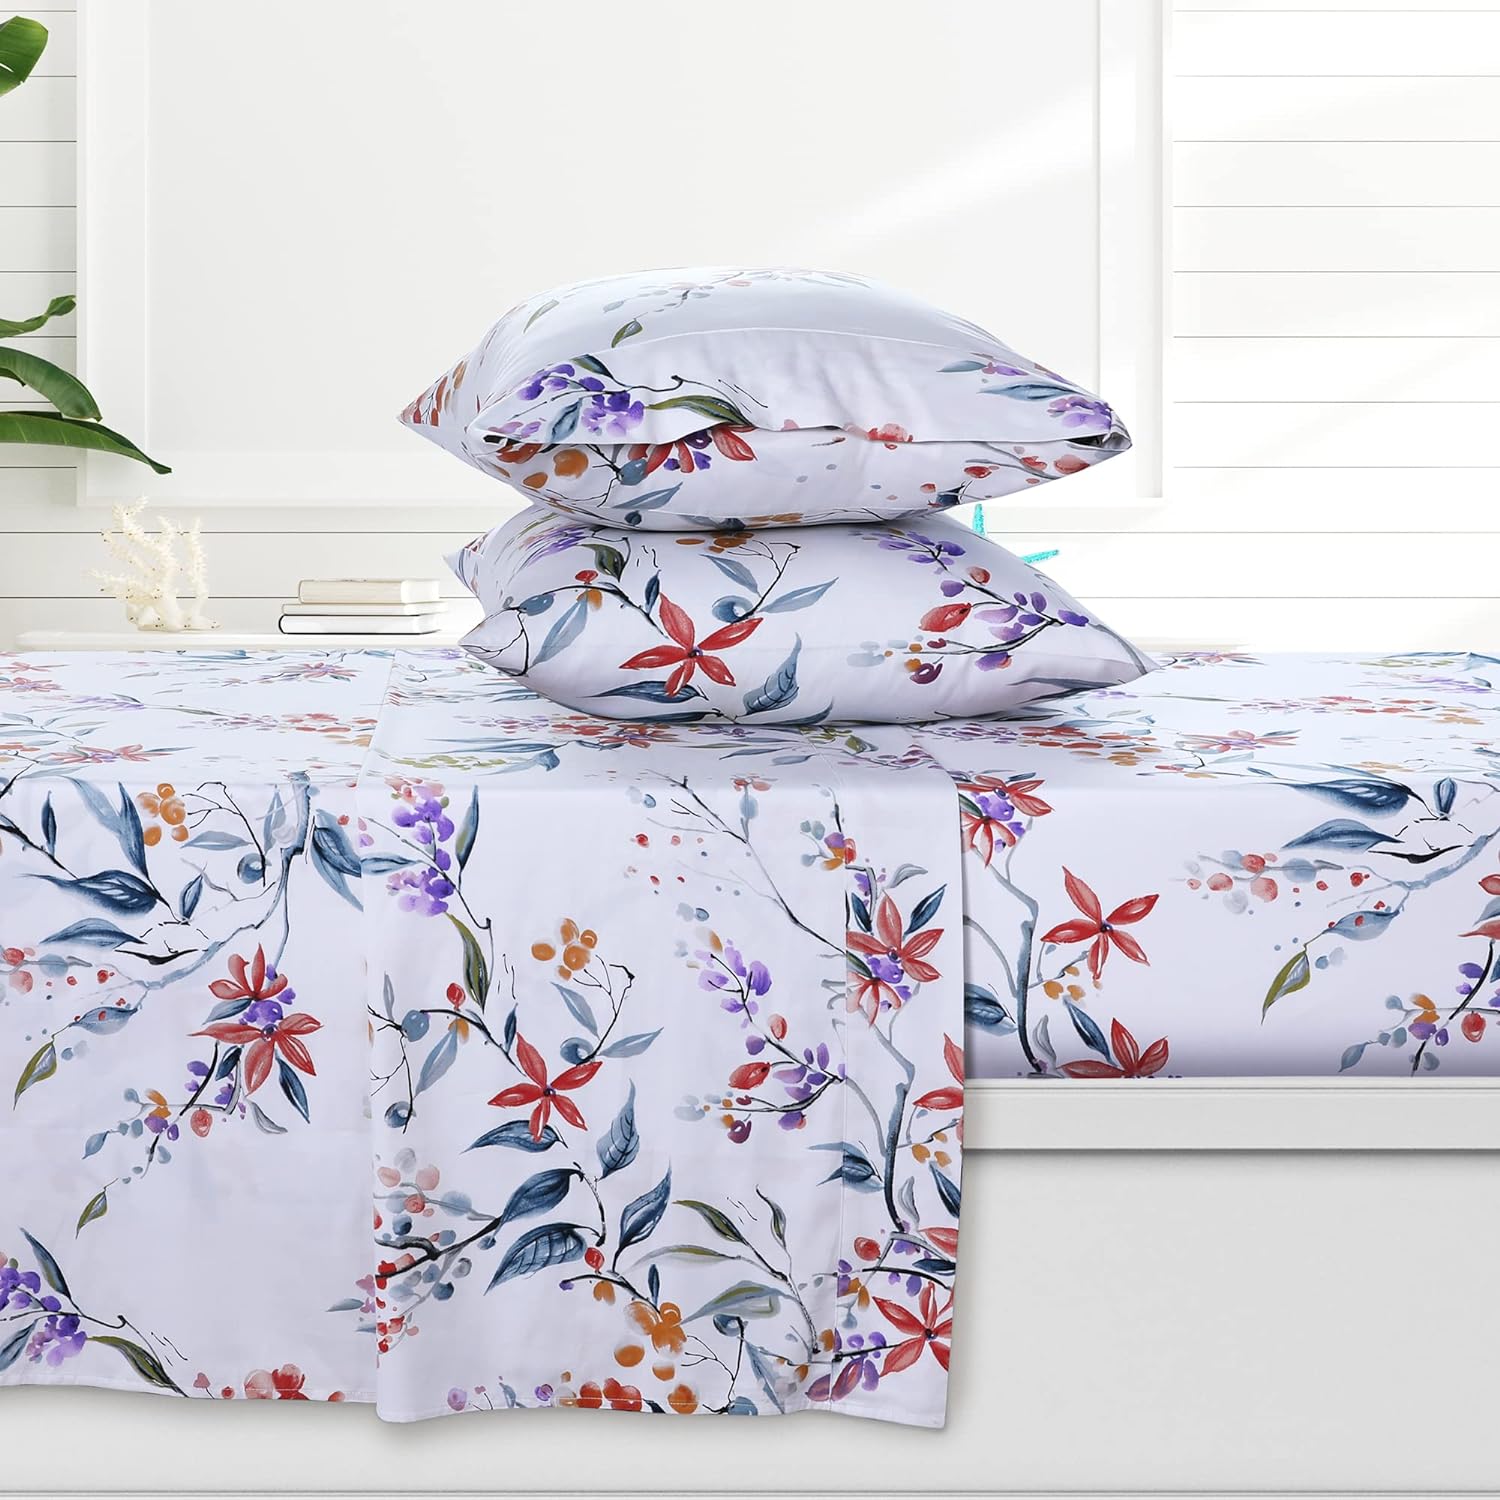 Estella 300 Thread Count Organic Cotton Deep Pocket Bed Sheet Set, Fits up to 19 inch Mattress - Queen, Multicolor